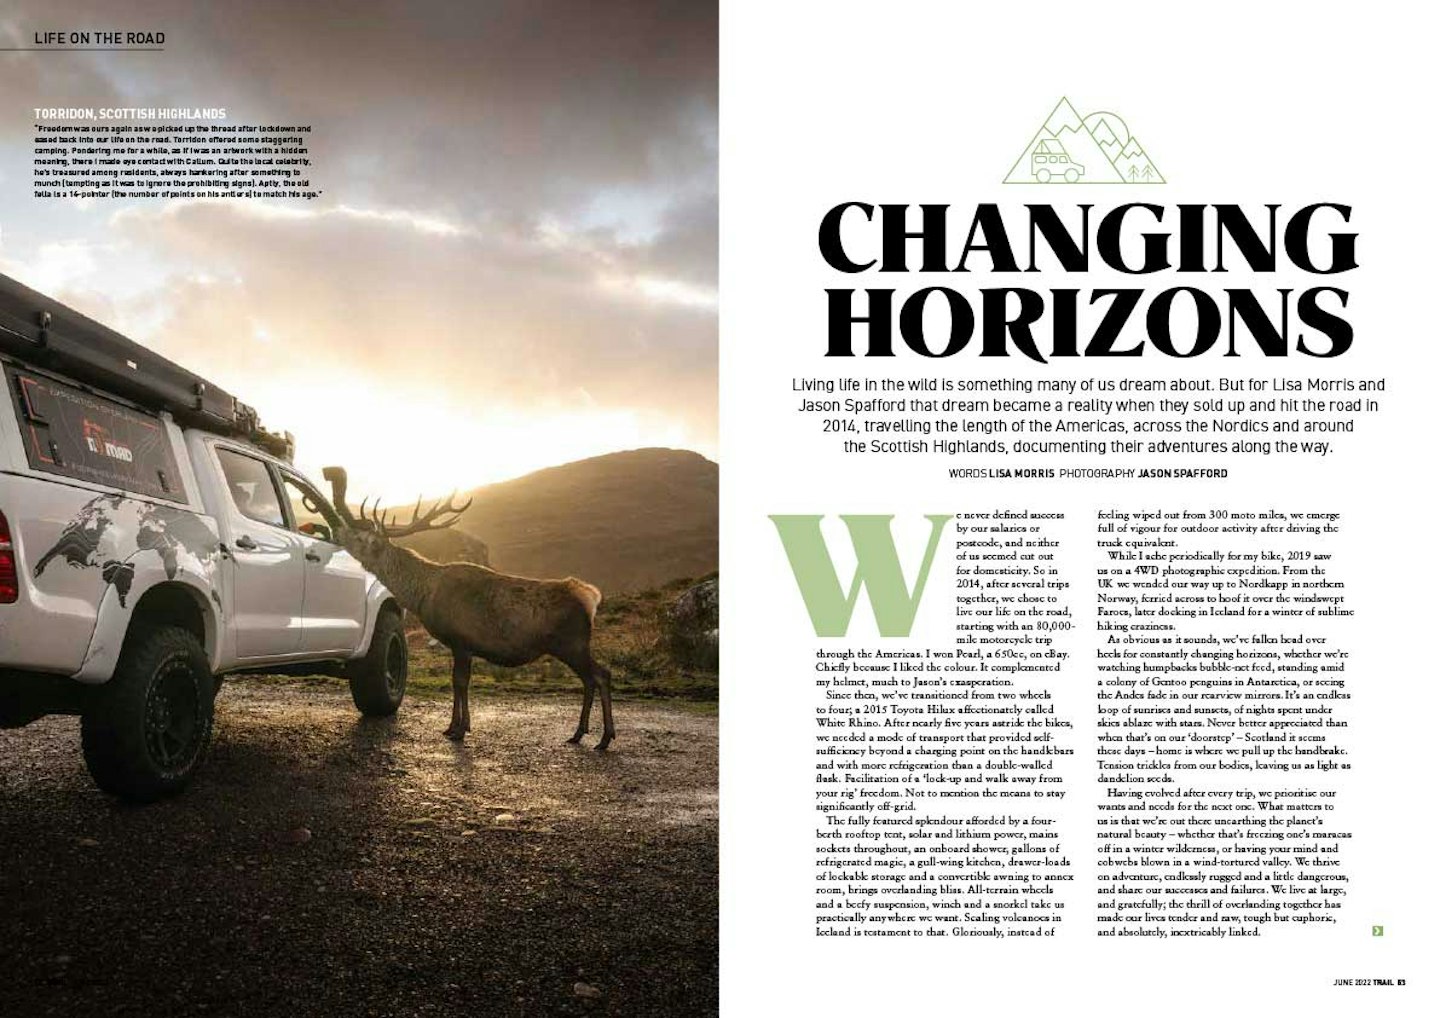 Trail magazine article - Changing horizons